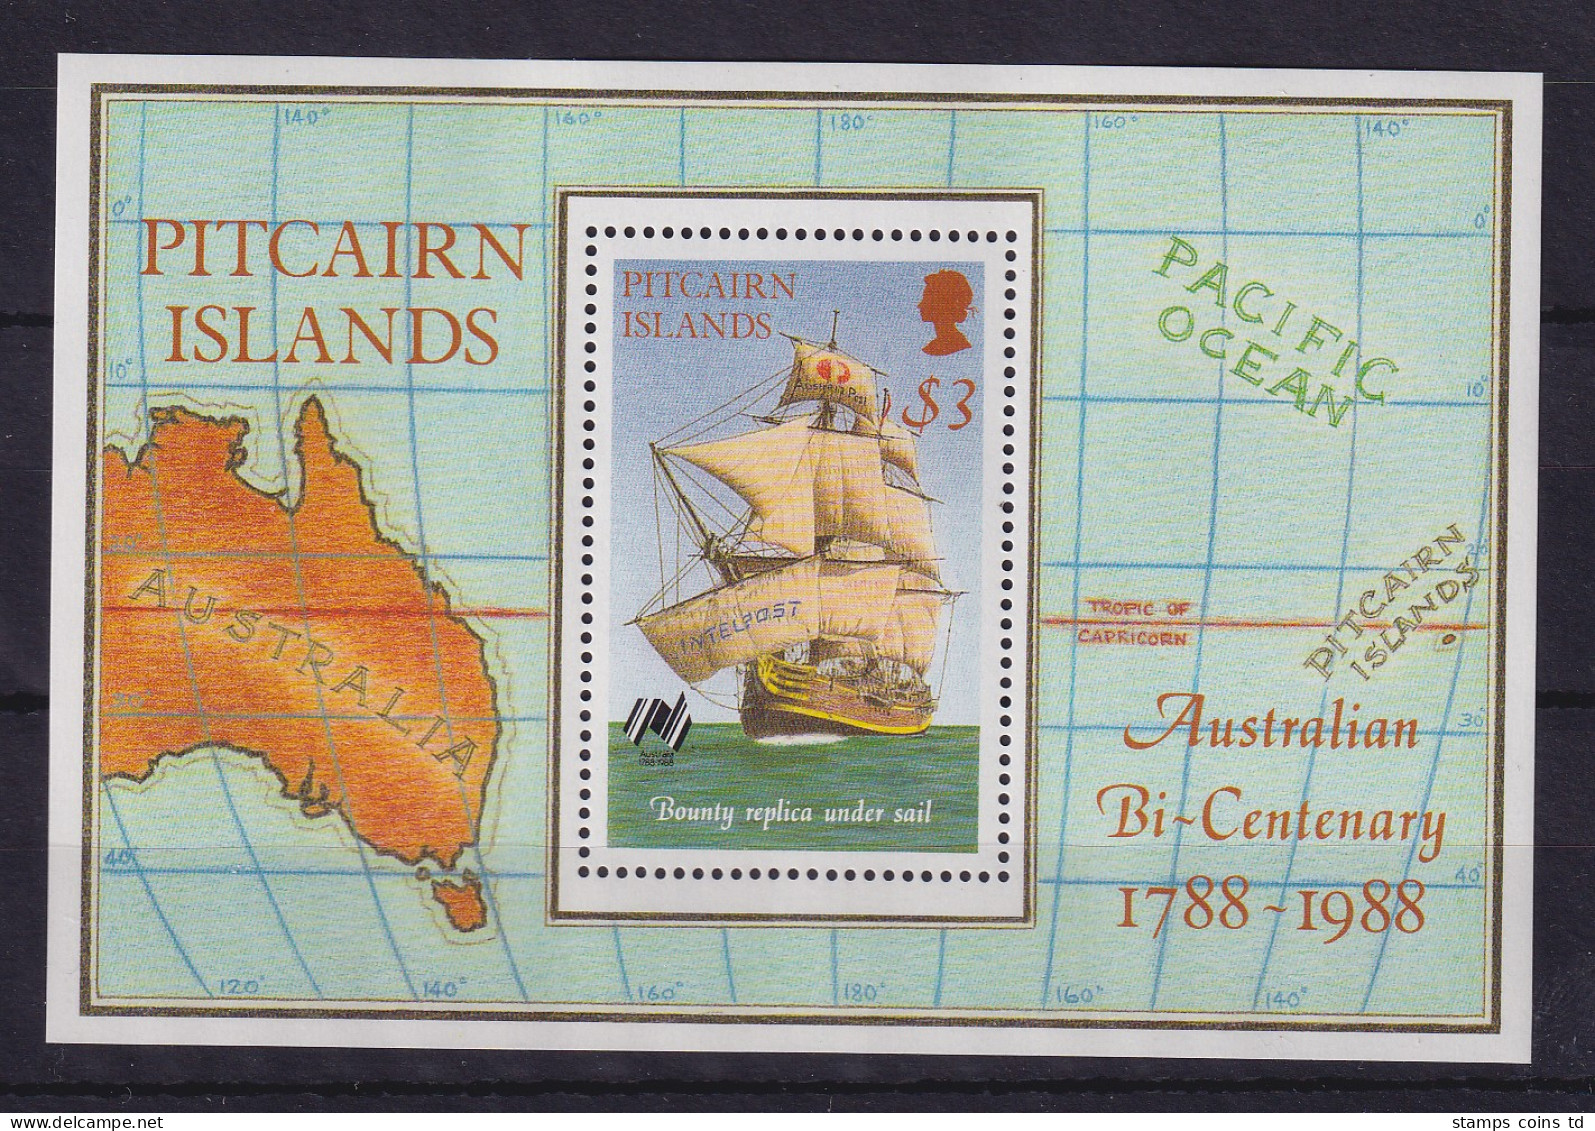 Pitcairn Islands 1988 200-Jahr-Feier Australiens Mi.-Nr. Block 9 Postfrisch ** - Pitcairninsel